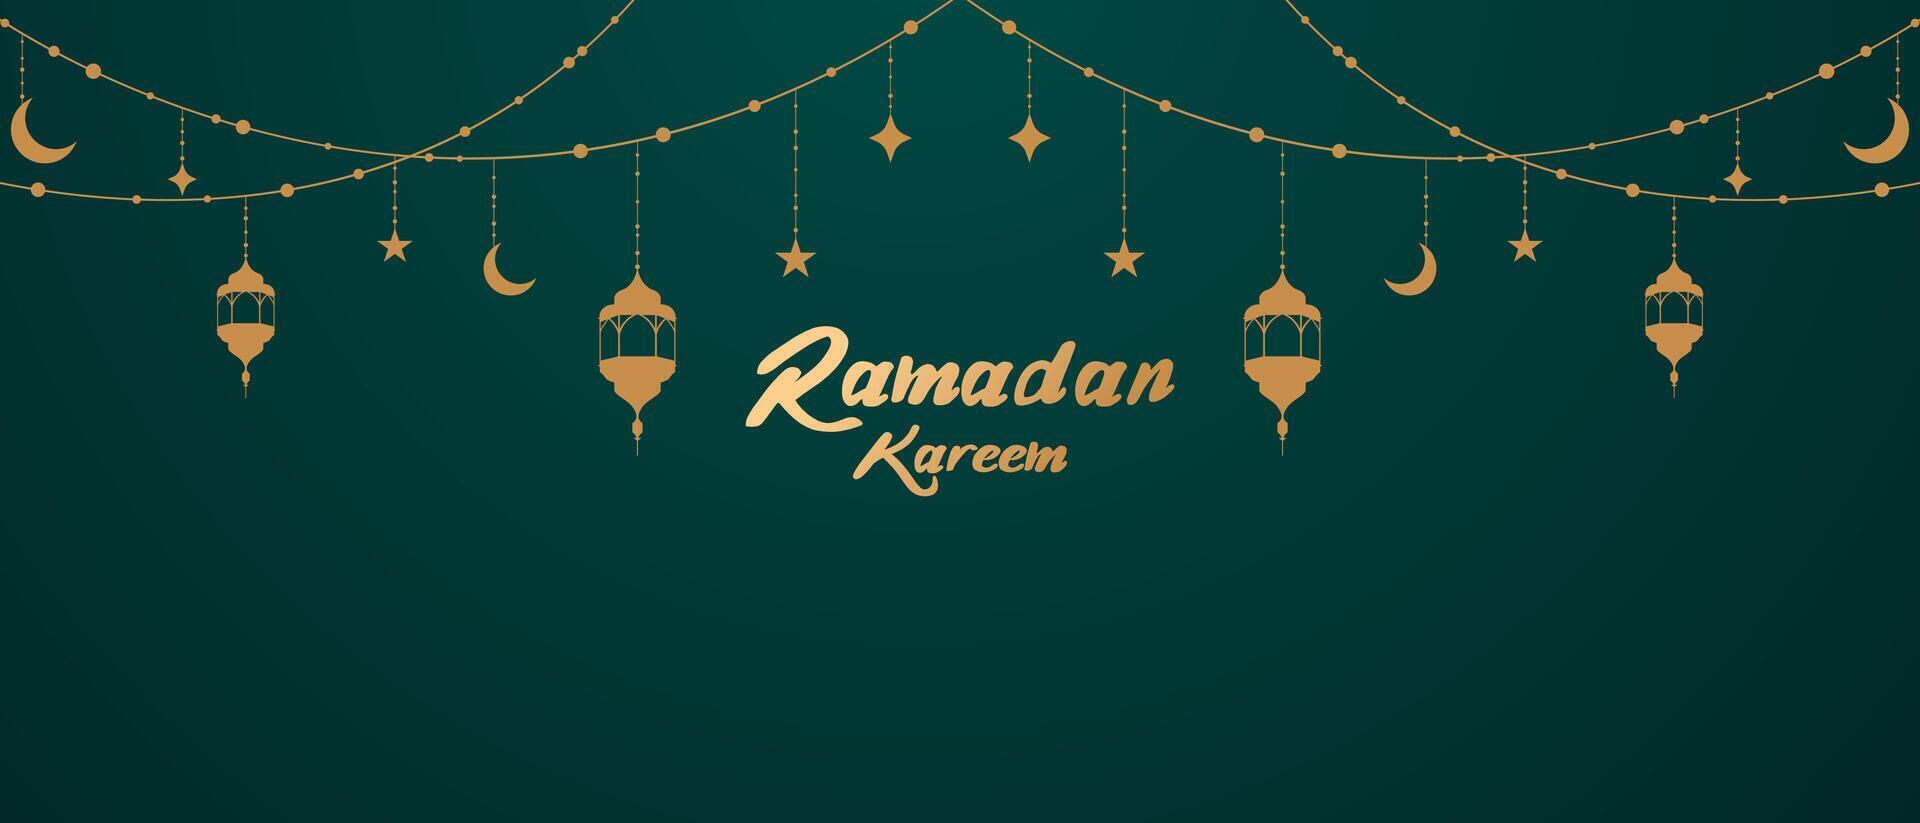 Ramadan Kareem Islamic festival greeting with beautiful lanterns decorated design vector illustration